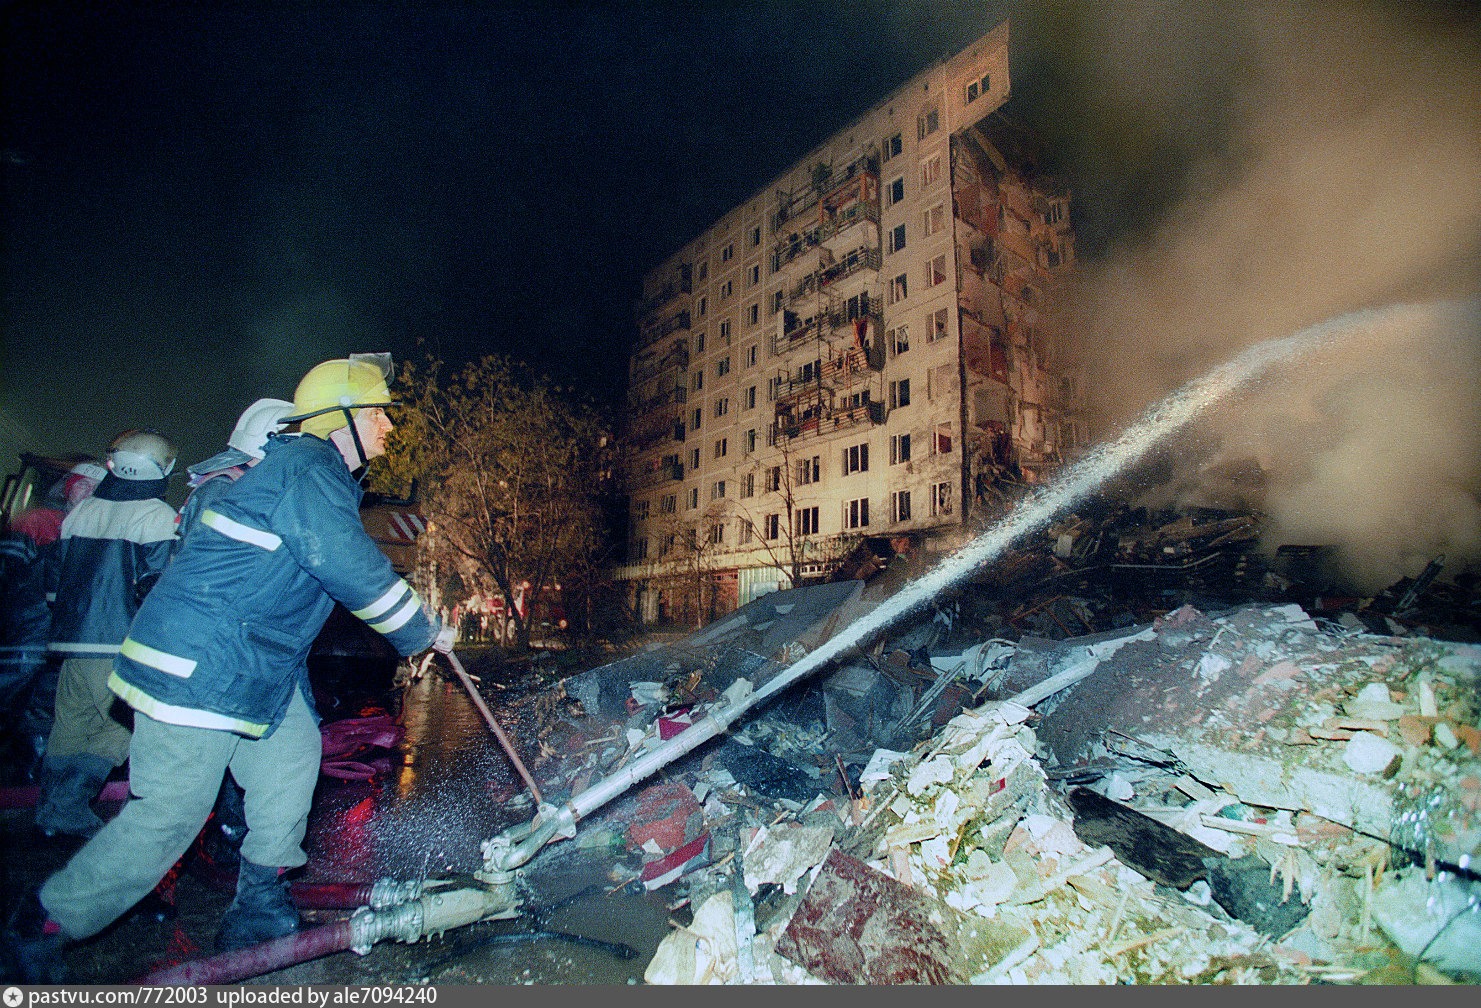 Какие дома взорвали в москве. Теракт на улице Гурьянова 1999. Взрыв дома на Гурьянова 1999. Взрывы на каширке и Гурьянова 1999. Улица Гурьянова 1999.